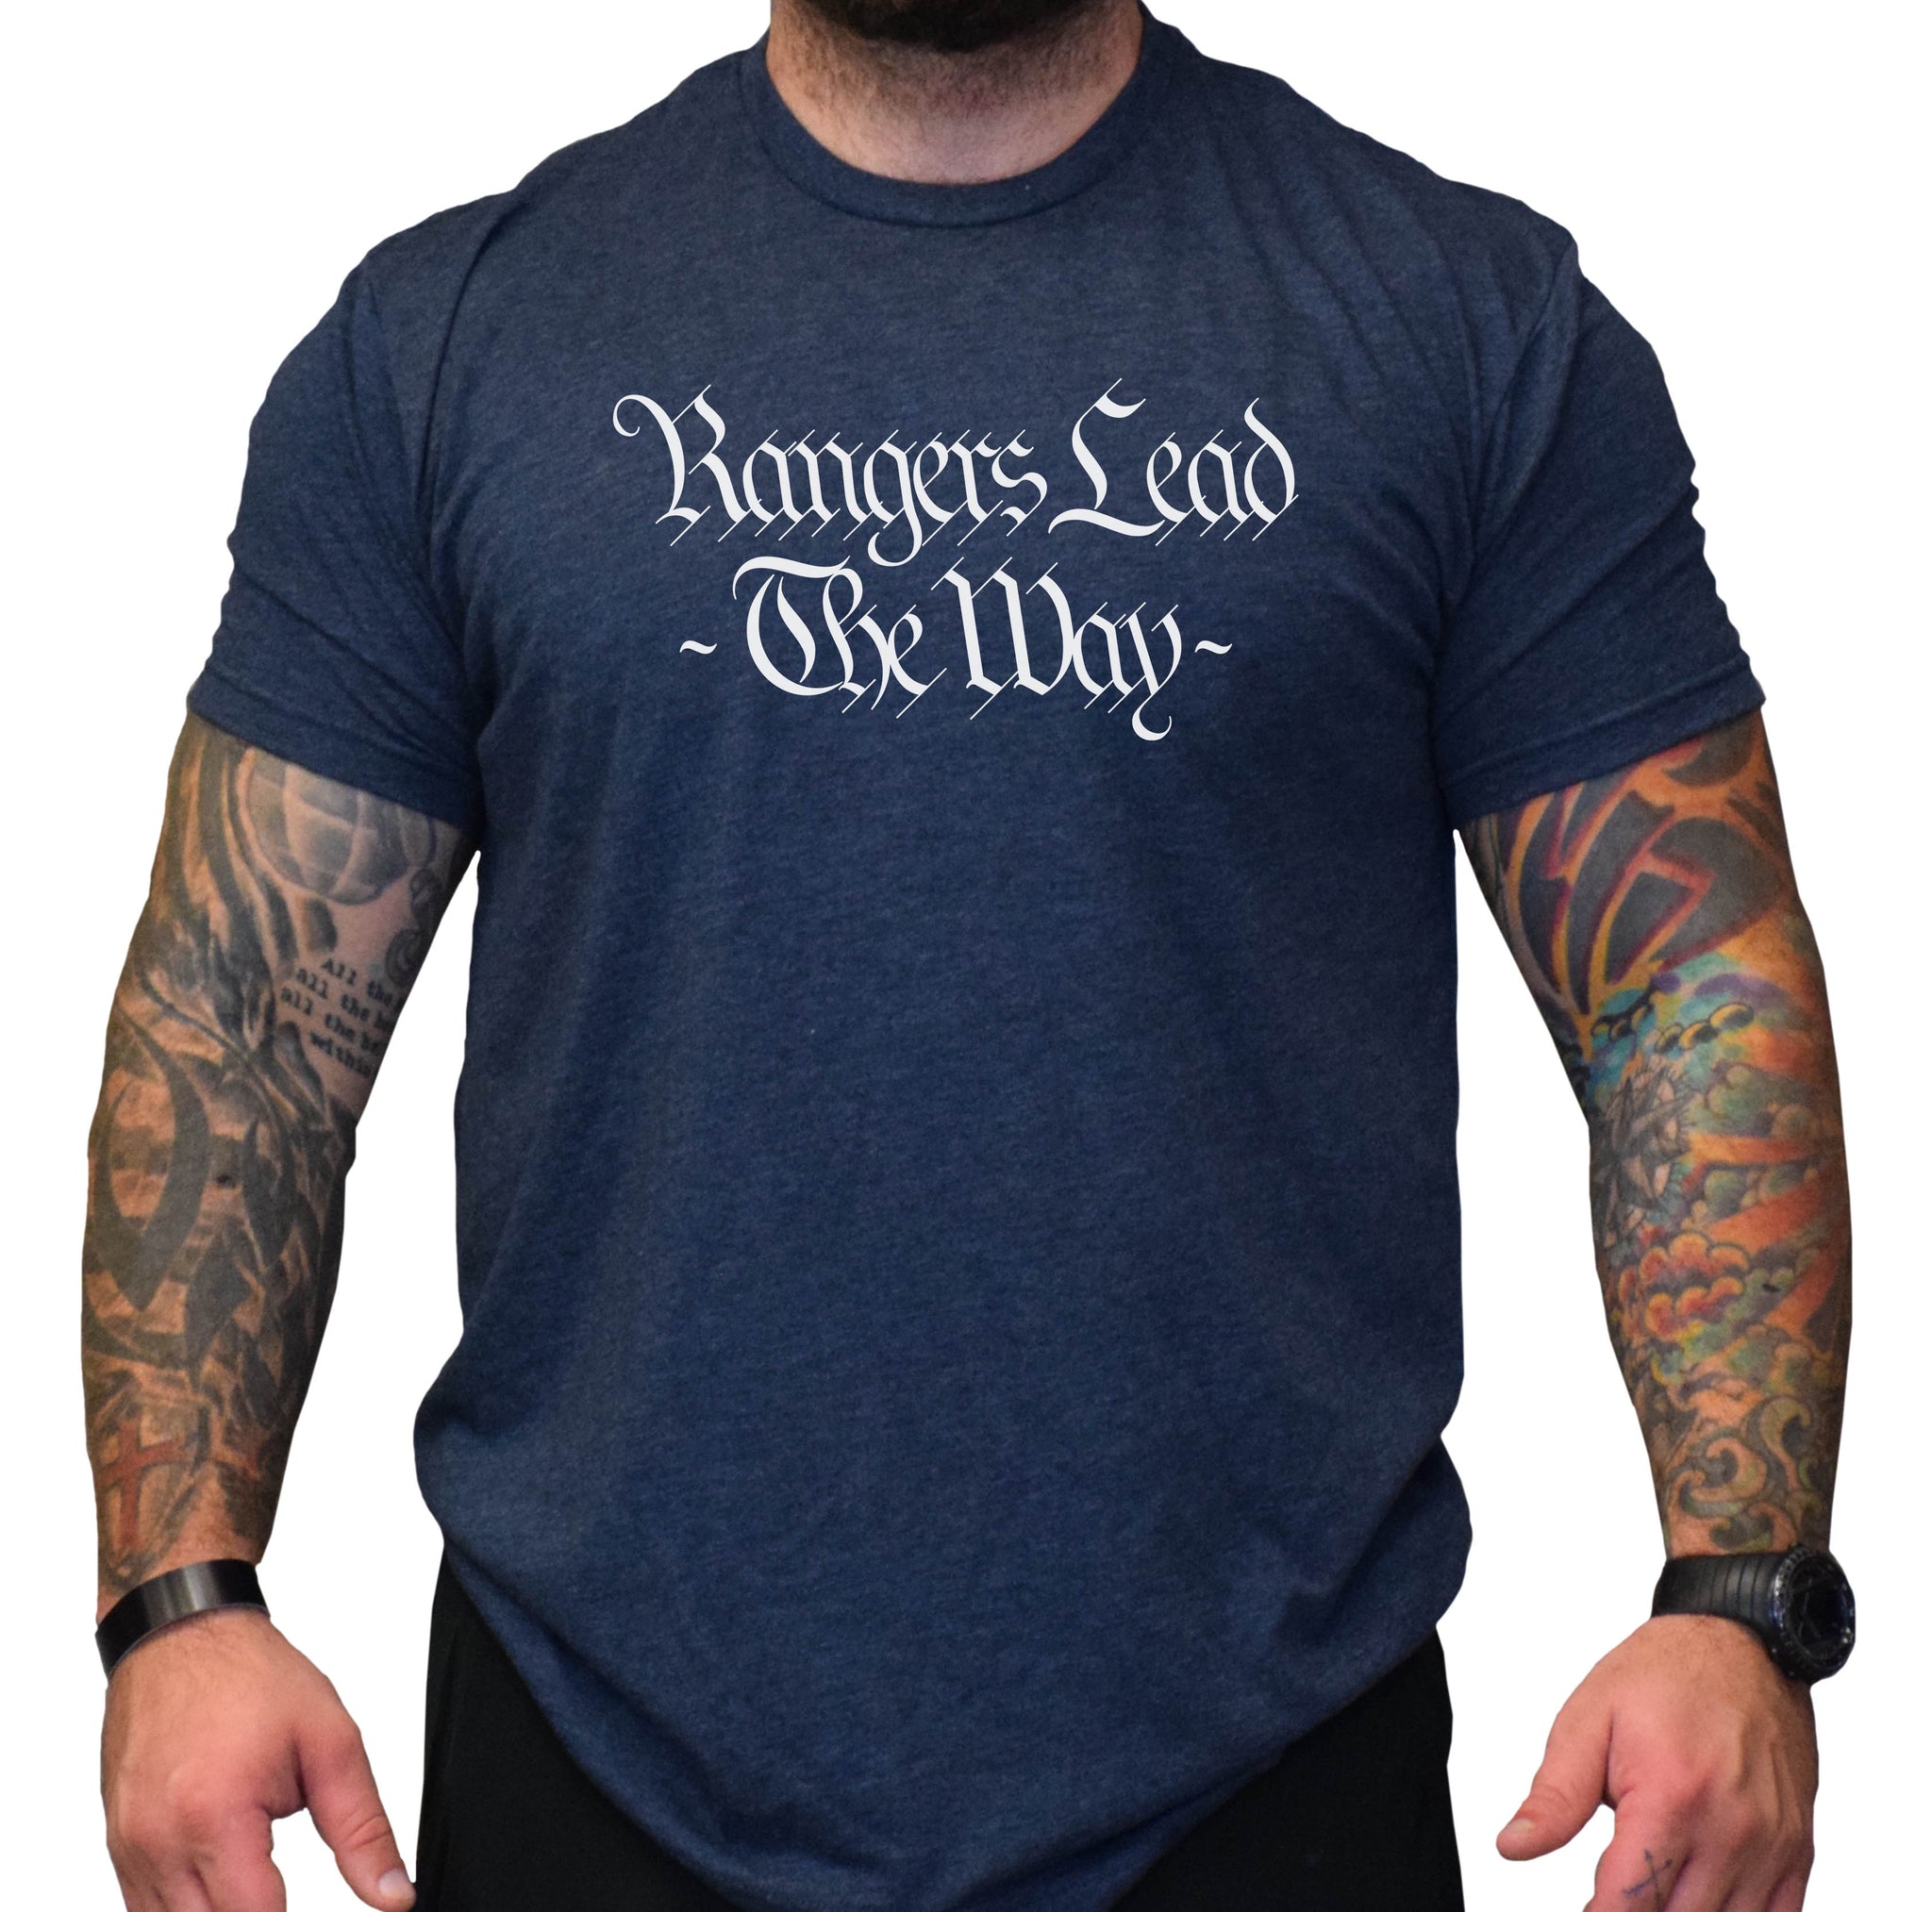 Rangers Lead The Way Script Shirt